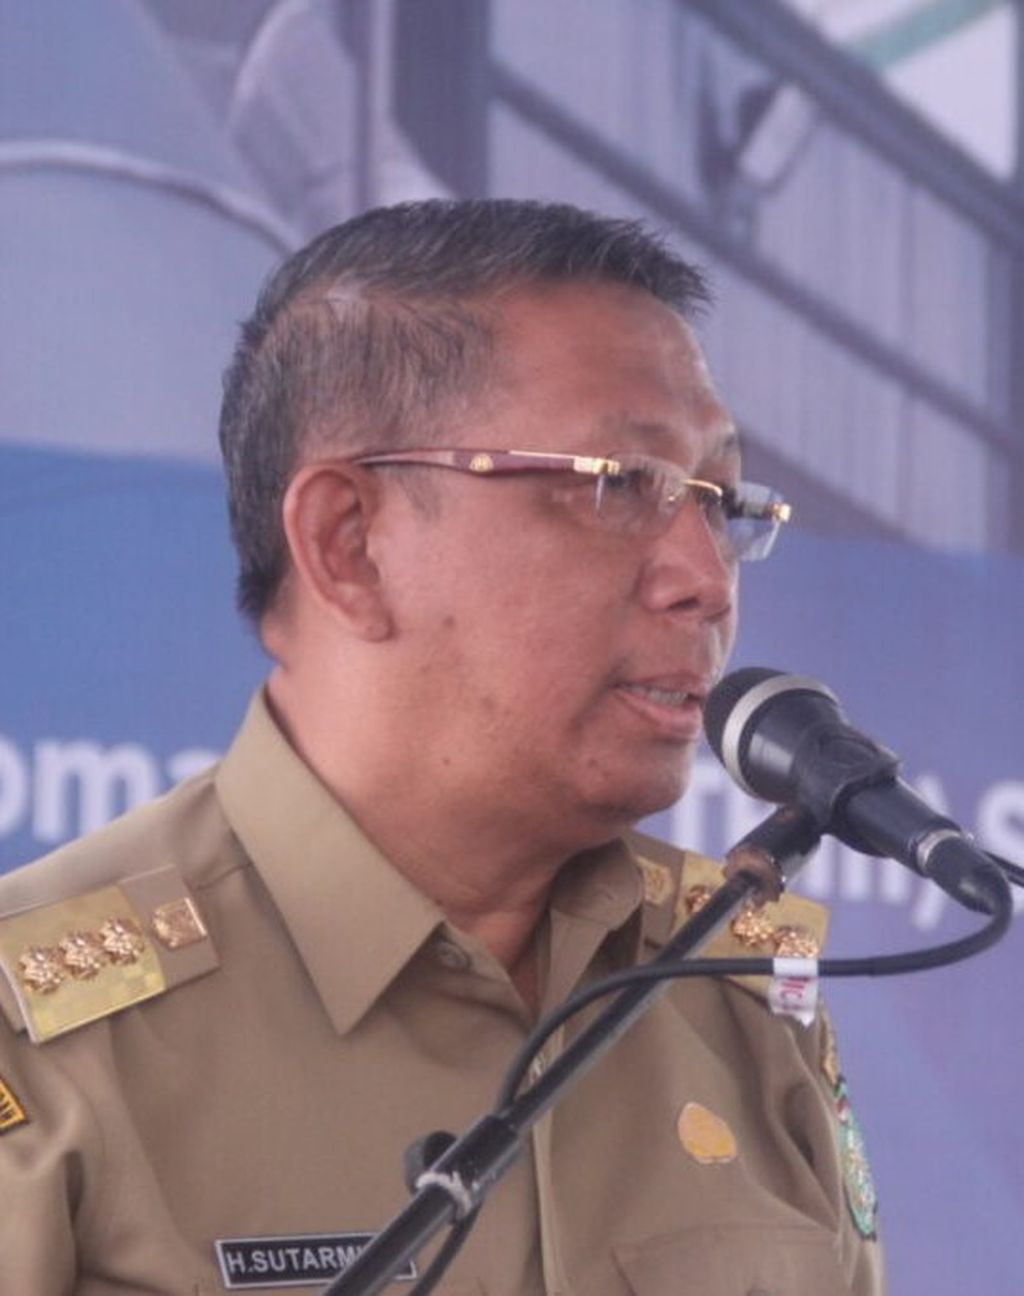 Gubernur Kalimantan Barat Sutarmidji